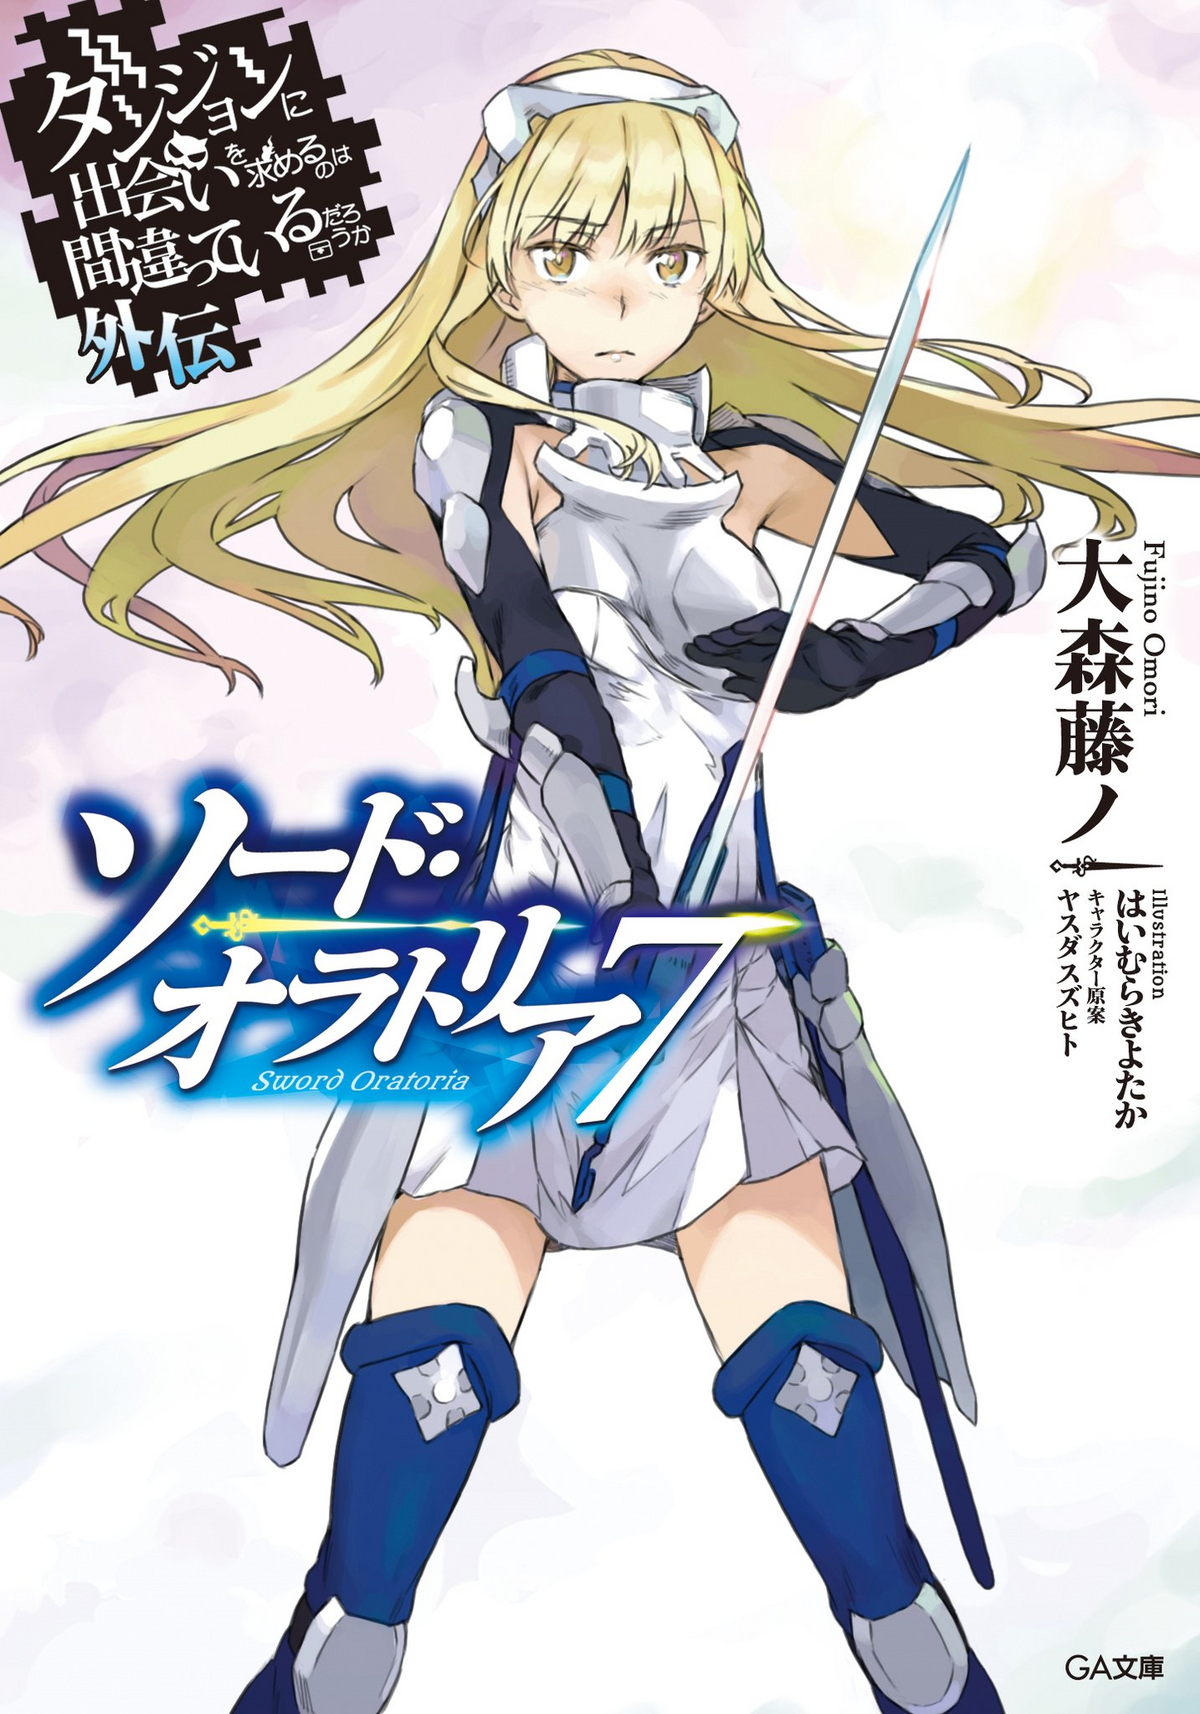 DanMachi: Sword Oratoria Gets TV Anime Series - Anime Herald